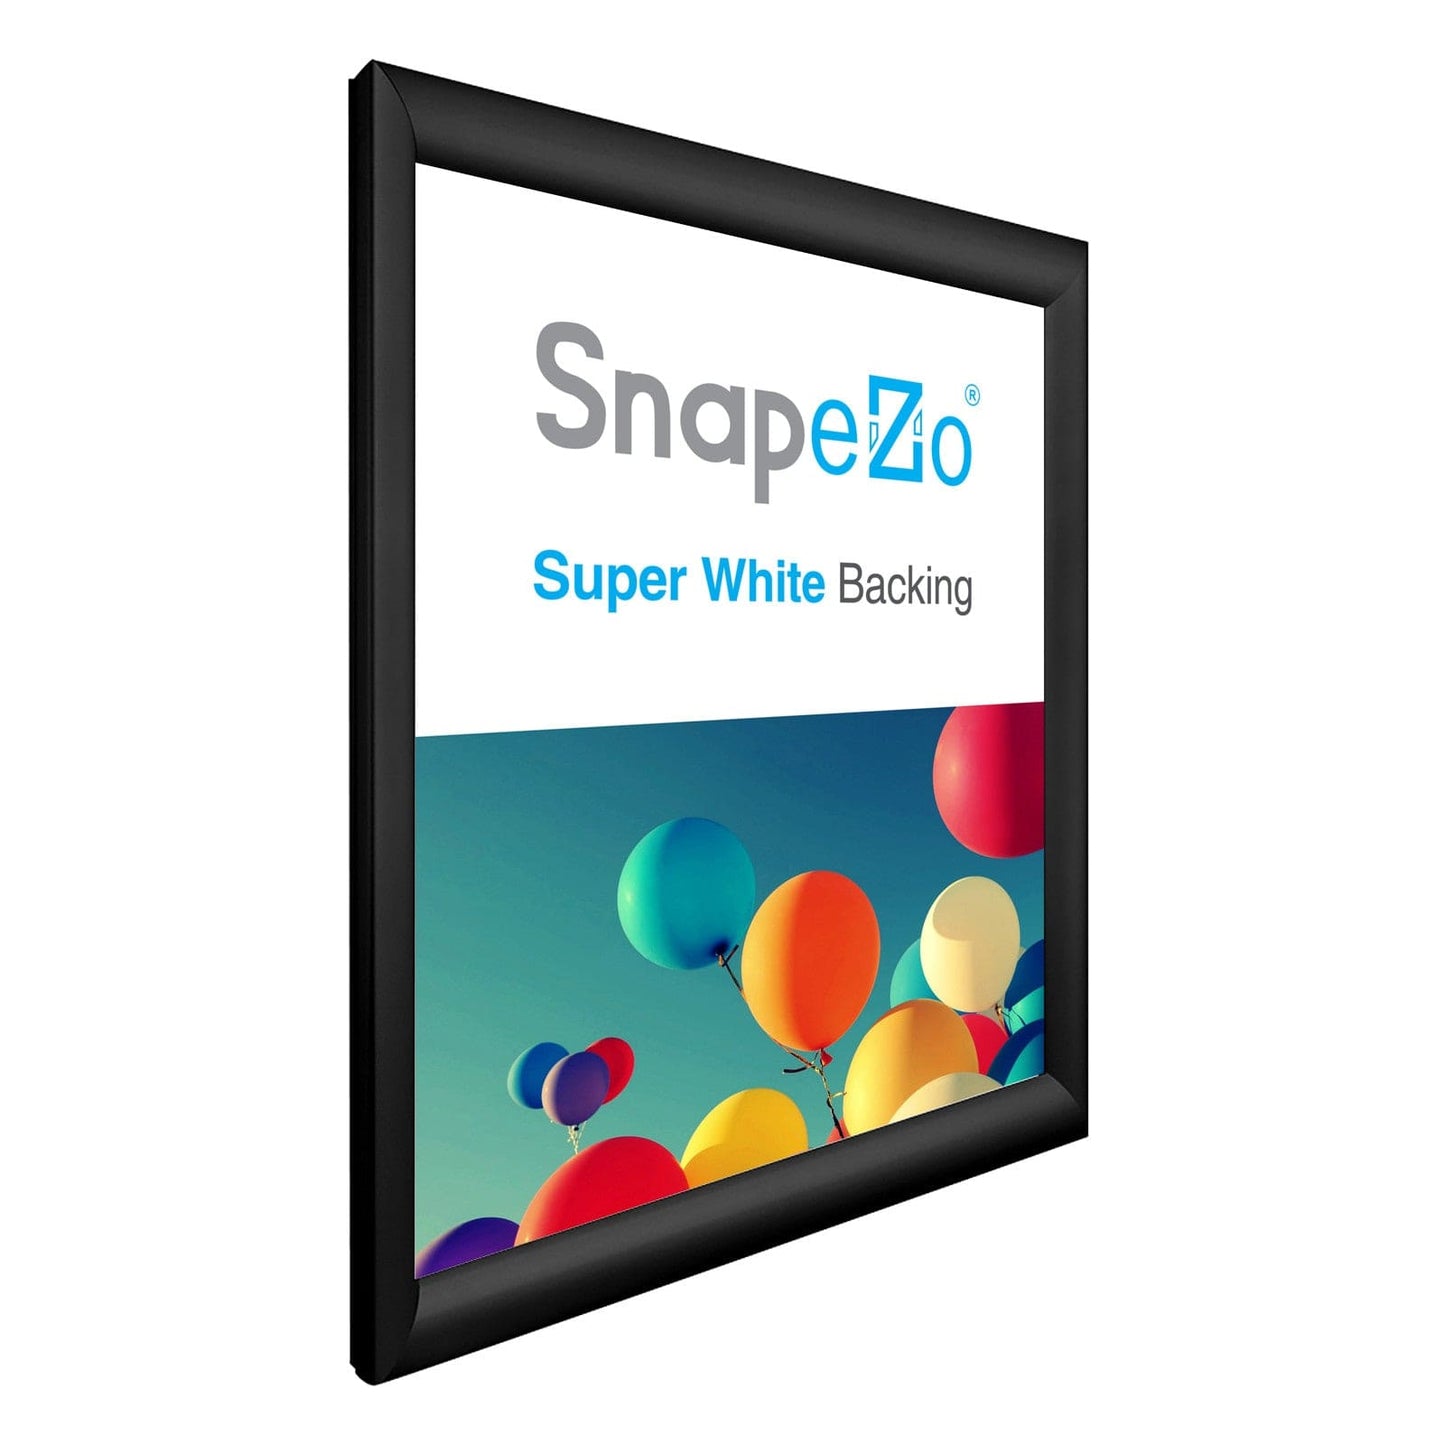 13x16 Black SnapeZo® Snap Frame - 1.2" Profile - Snap Frames Direct